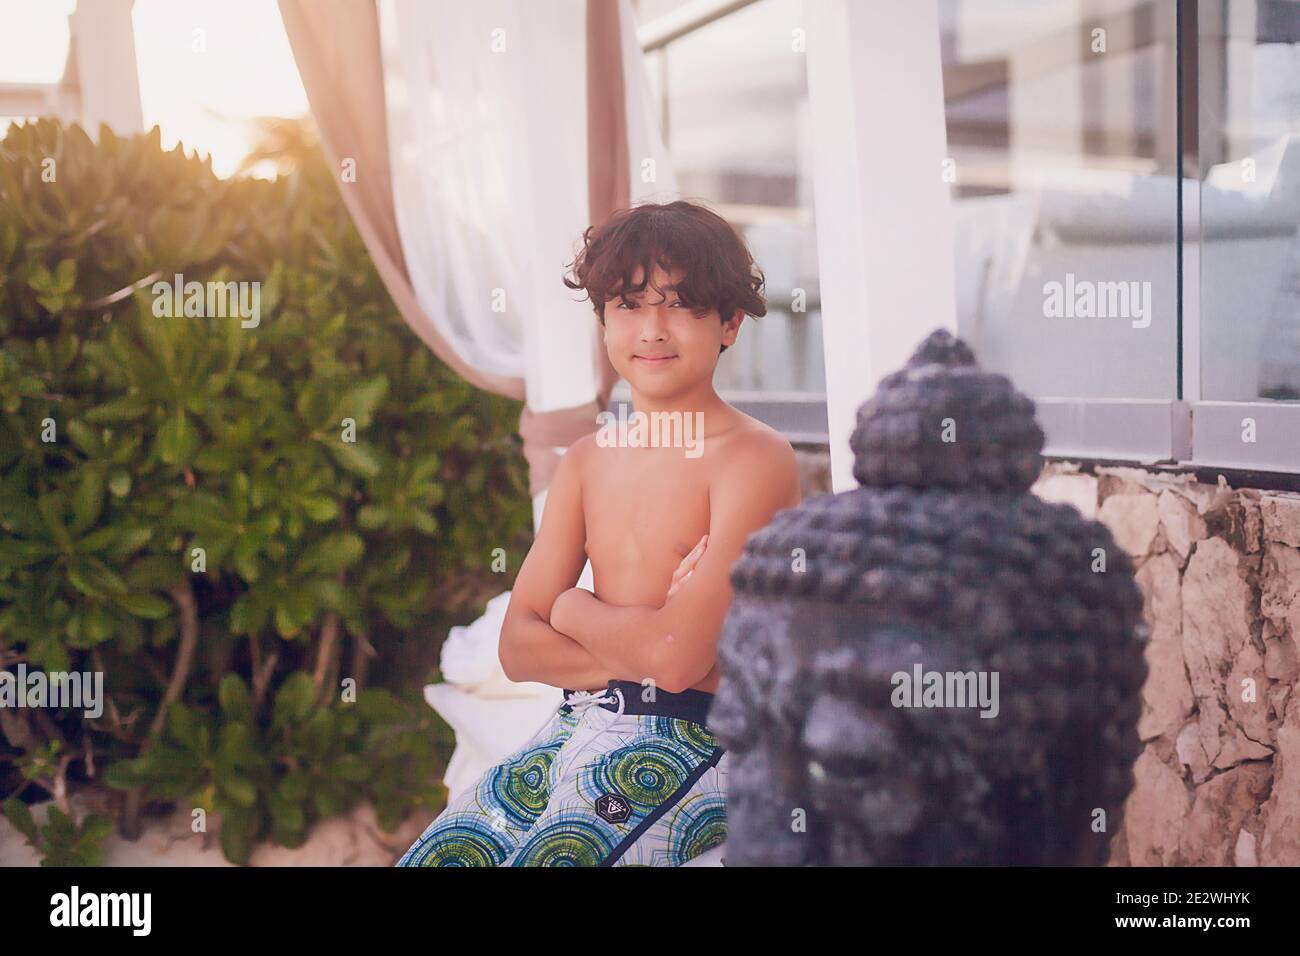 Teenage boy wearing swimming shorts Stock Photo by ©Smirno 34867125